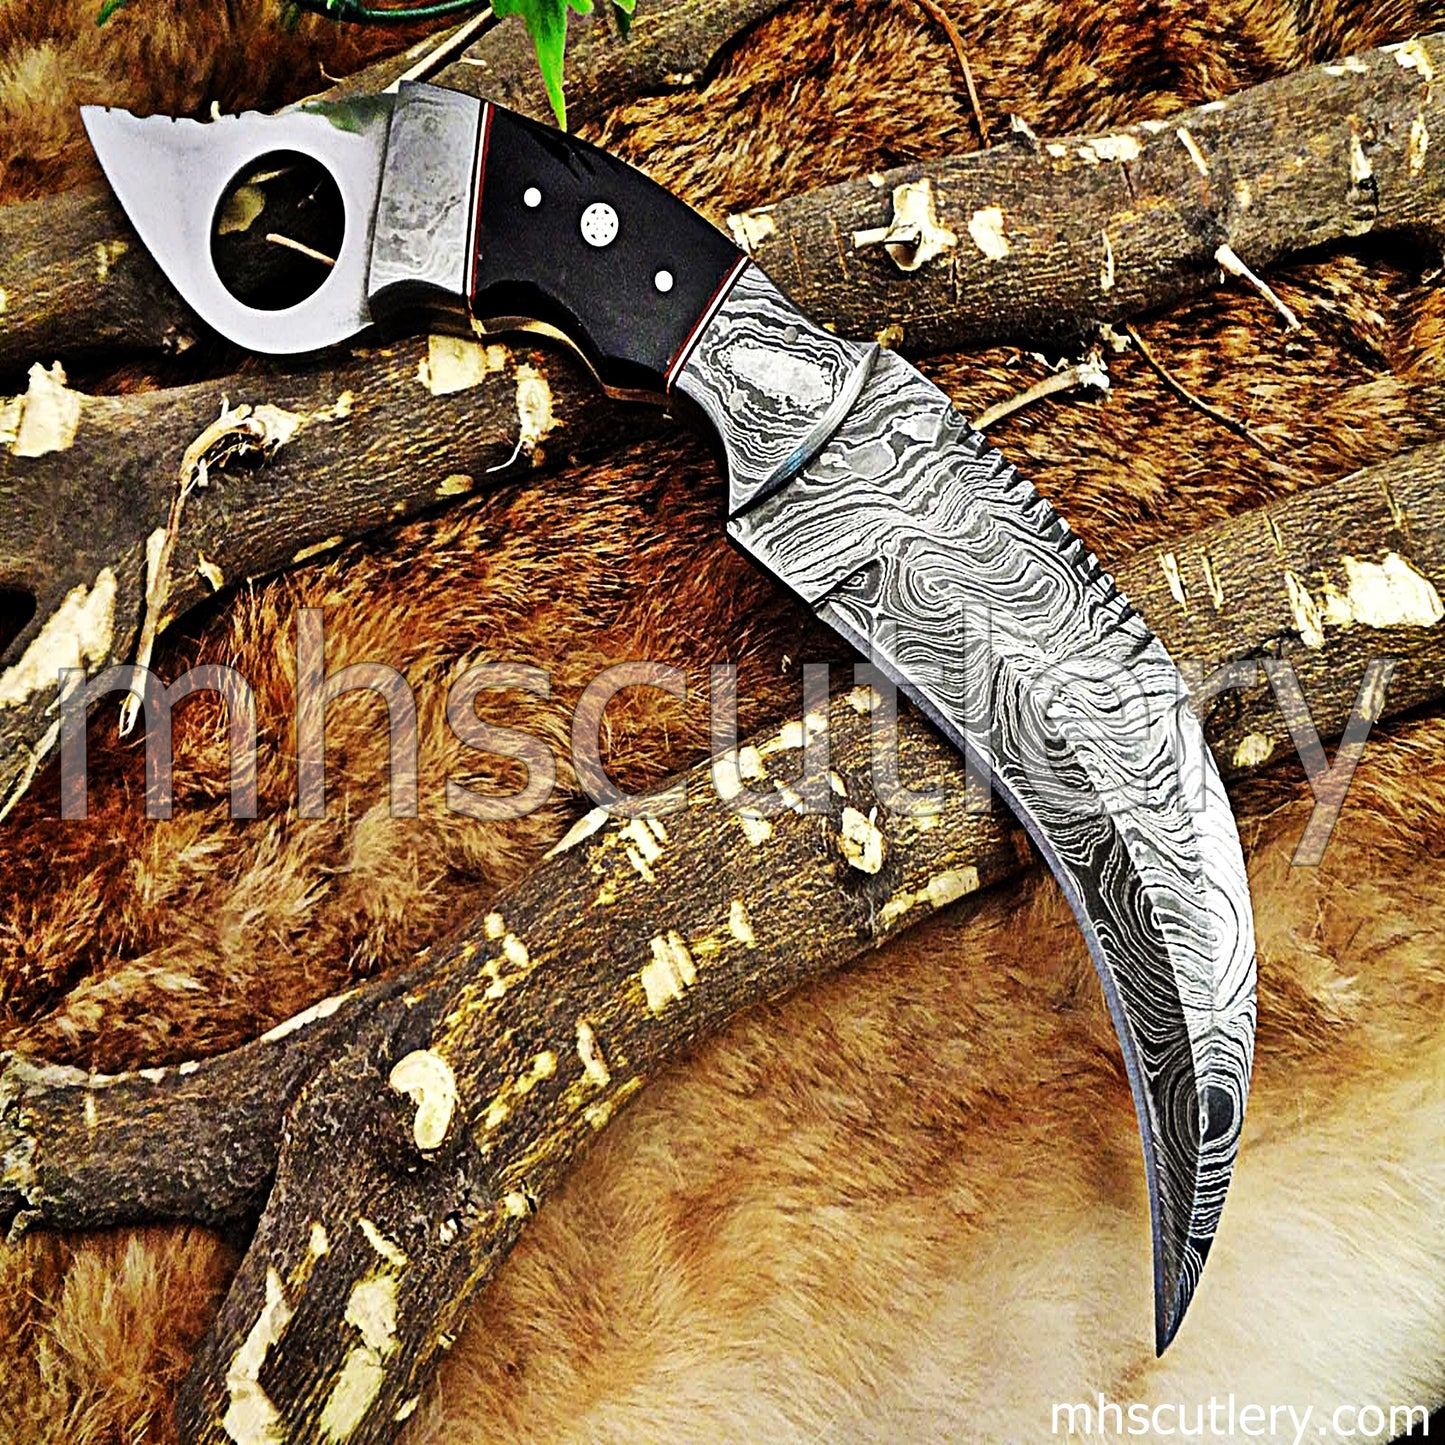 Handmade Damascus Steel Tactical Karambit Knife | mhscutlery